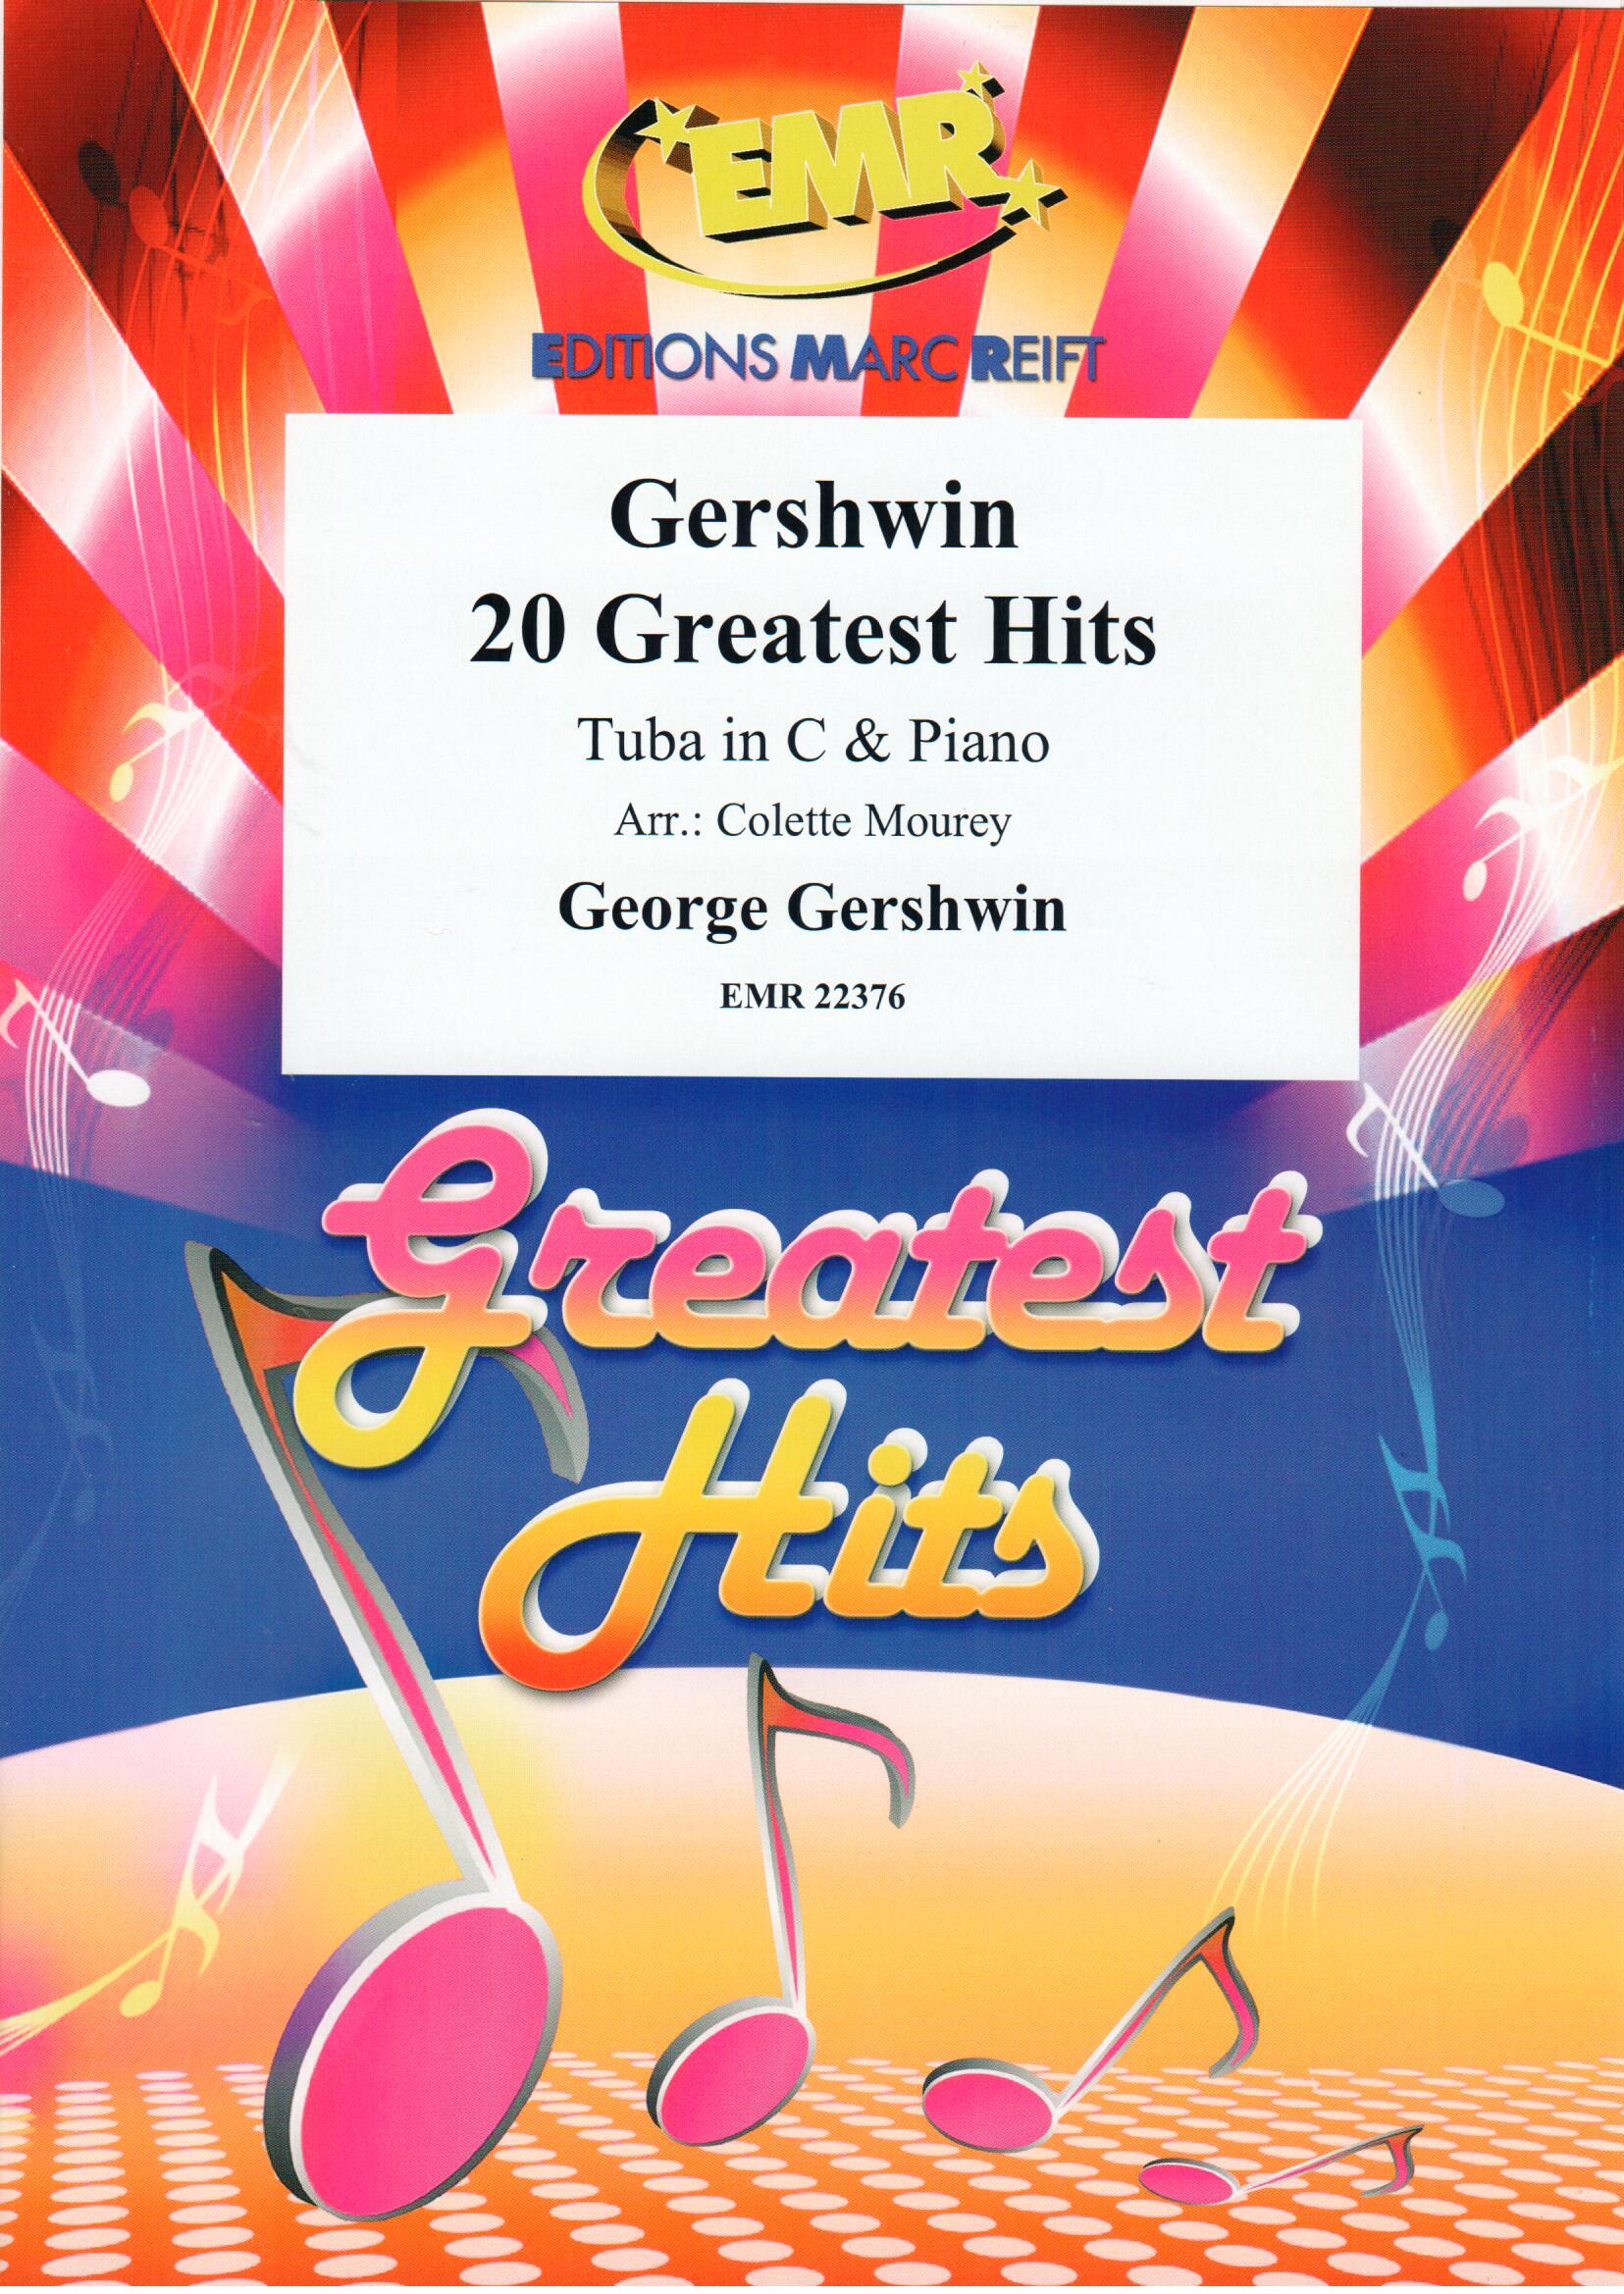 GERSHWIN 20 GREATEST HITS, SOLOS - E♭. Bass